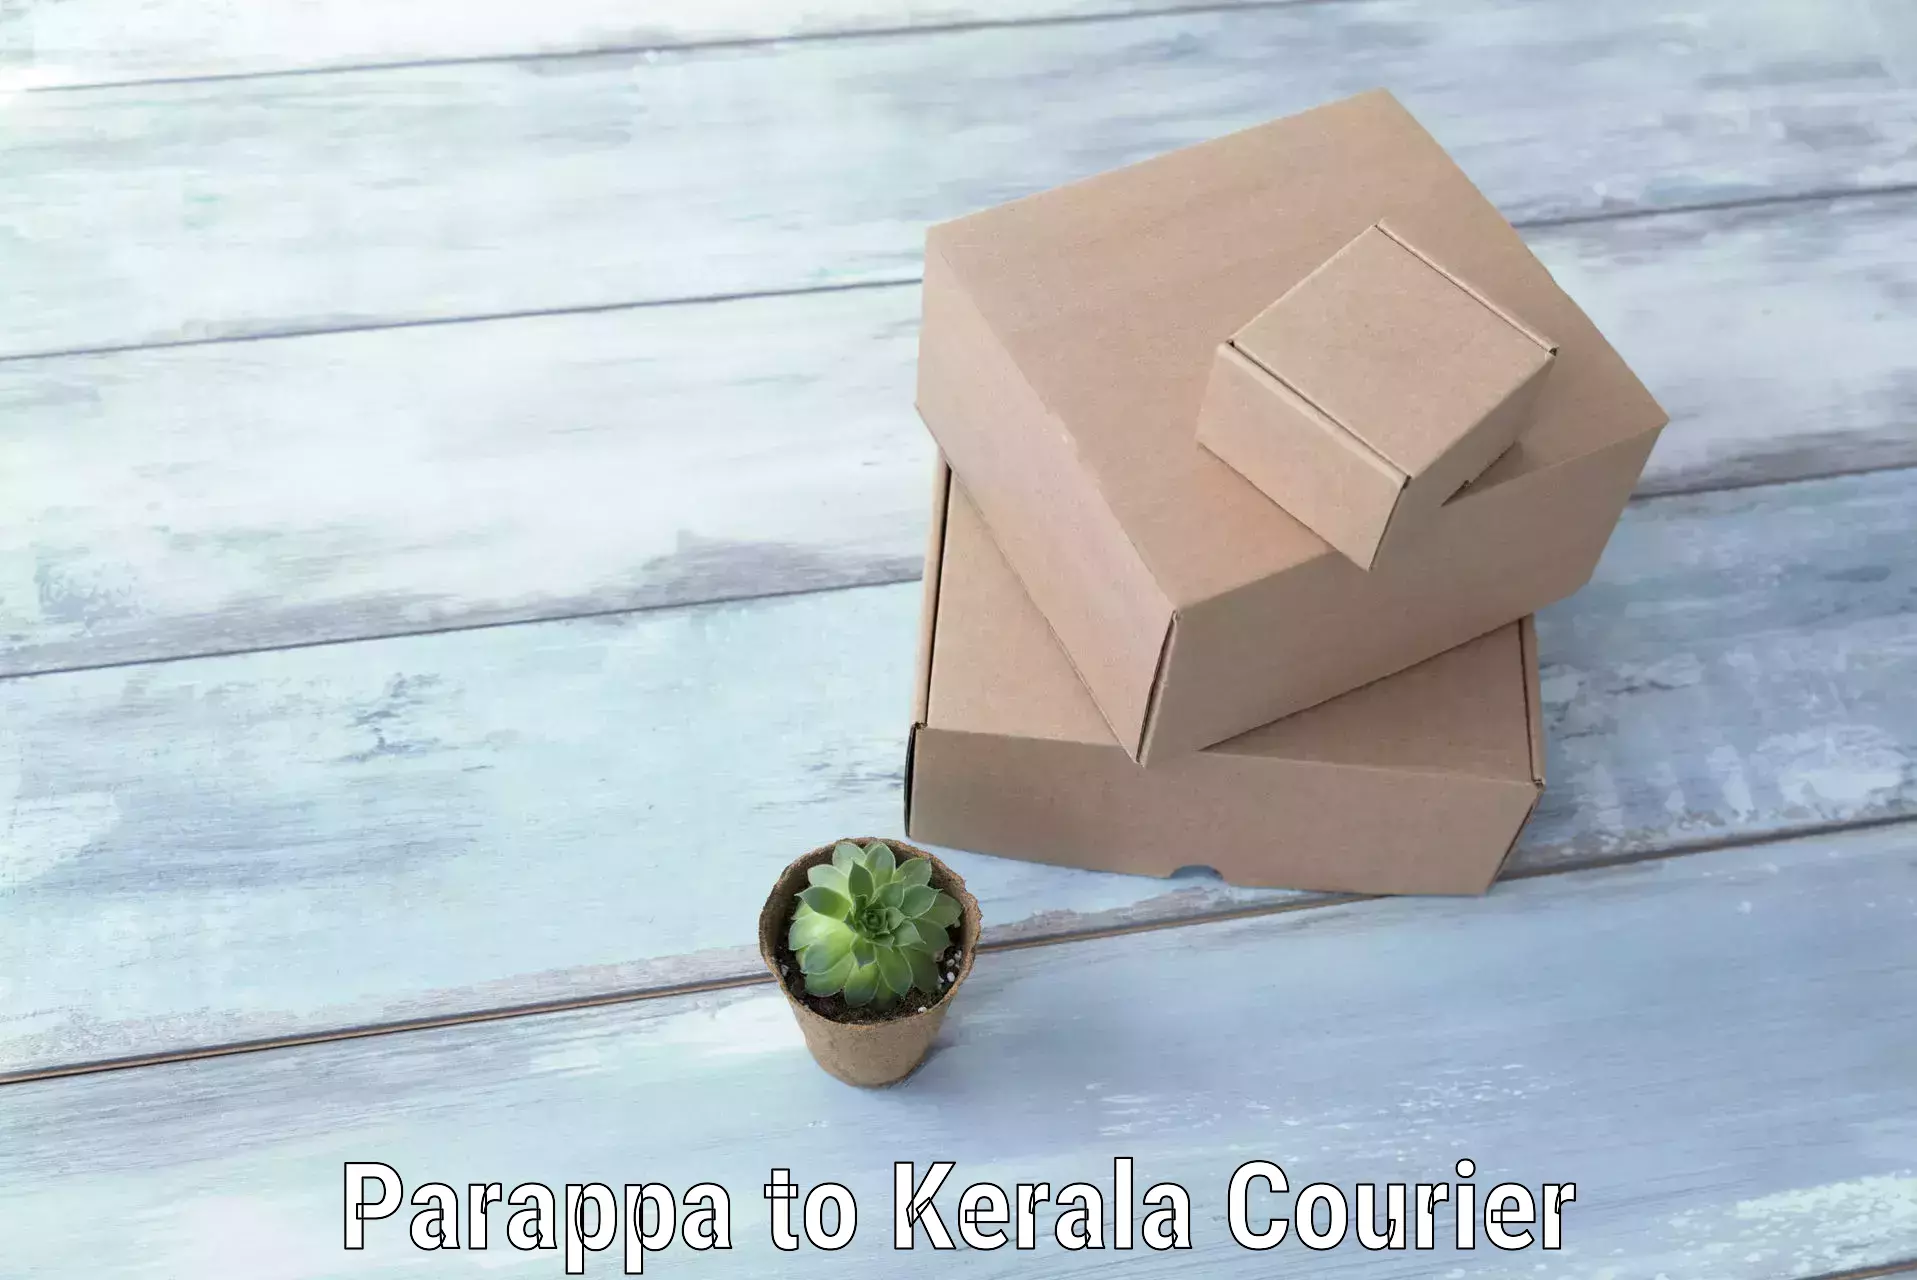 Door-to-door baggage service Parappa to Kerala